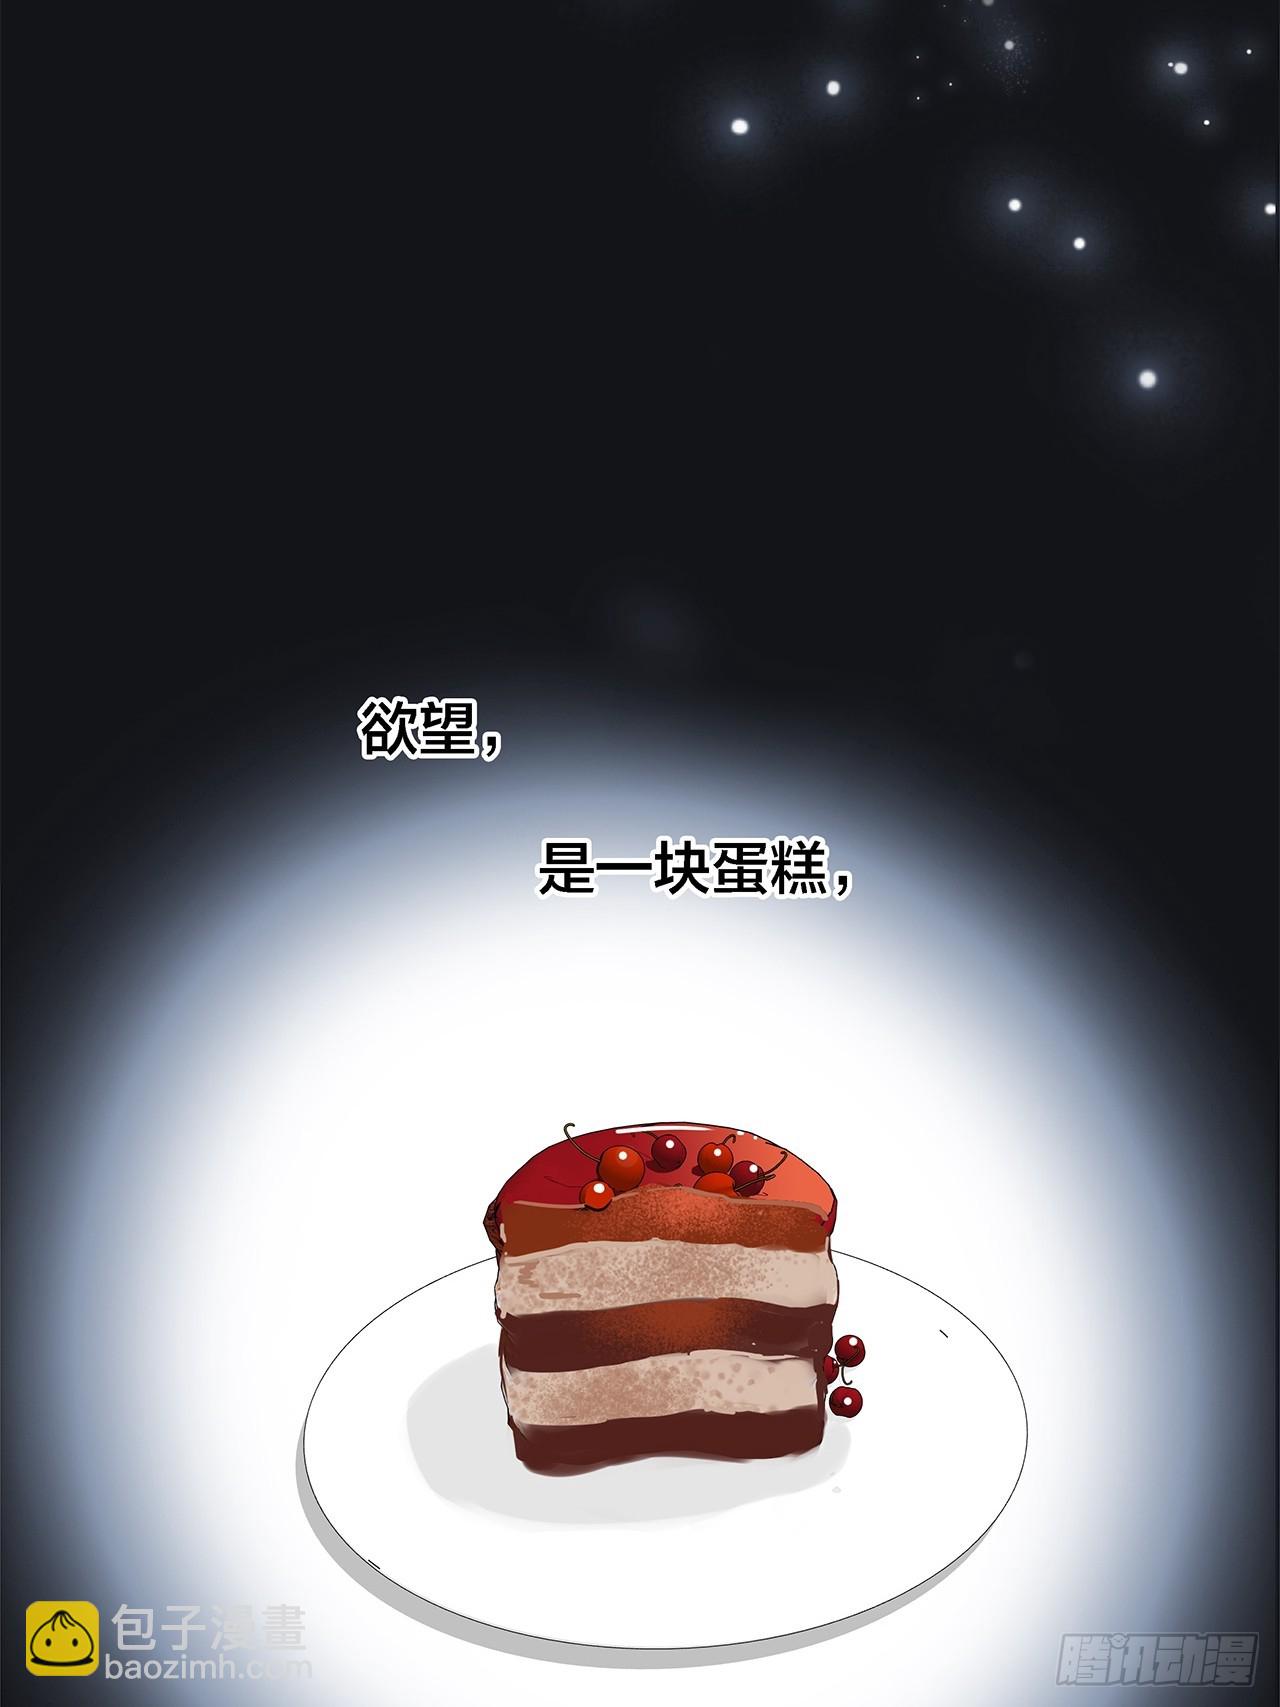 1st Kiss - 45：慾望，是一塊蛋糕(1/2) - 2